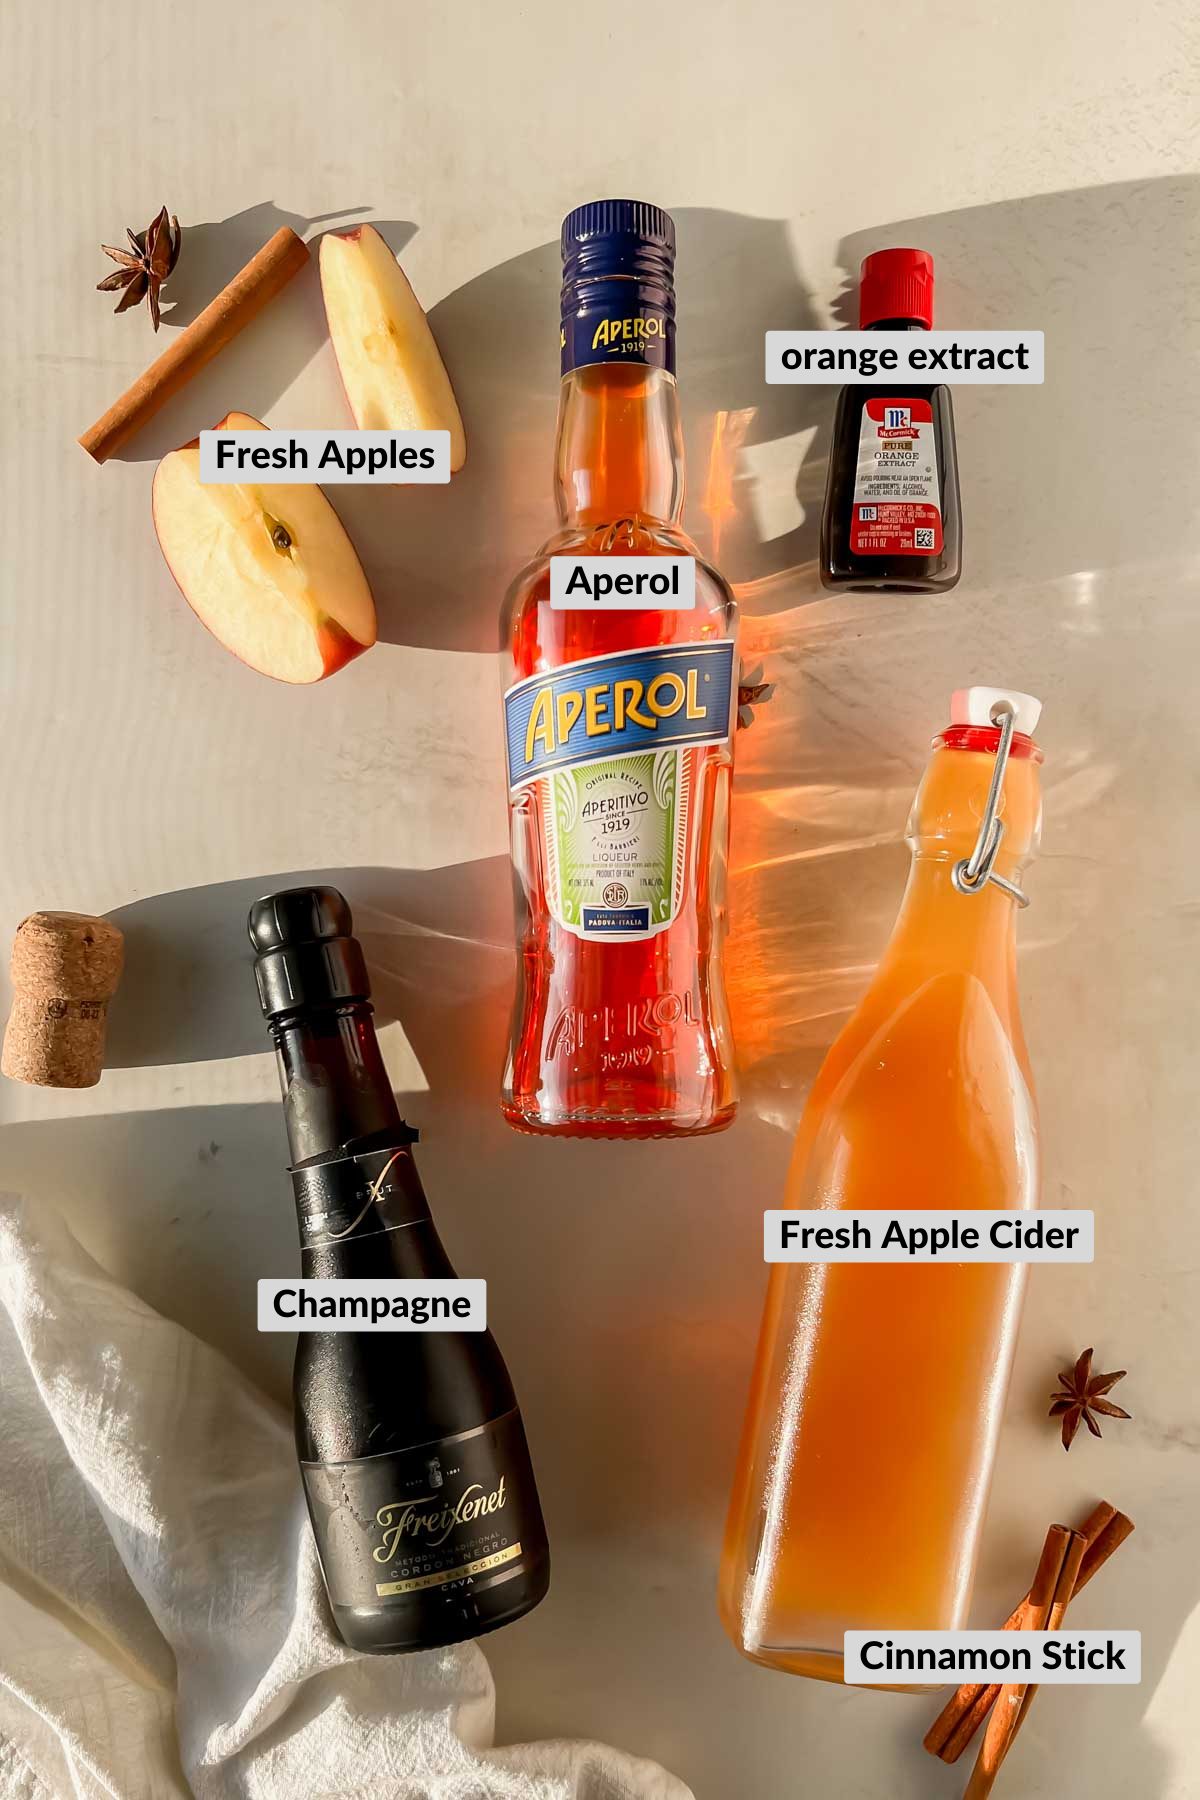 labeled apple cider aperol spritz ingredients spread on plain background.